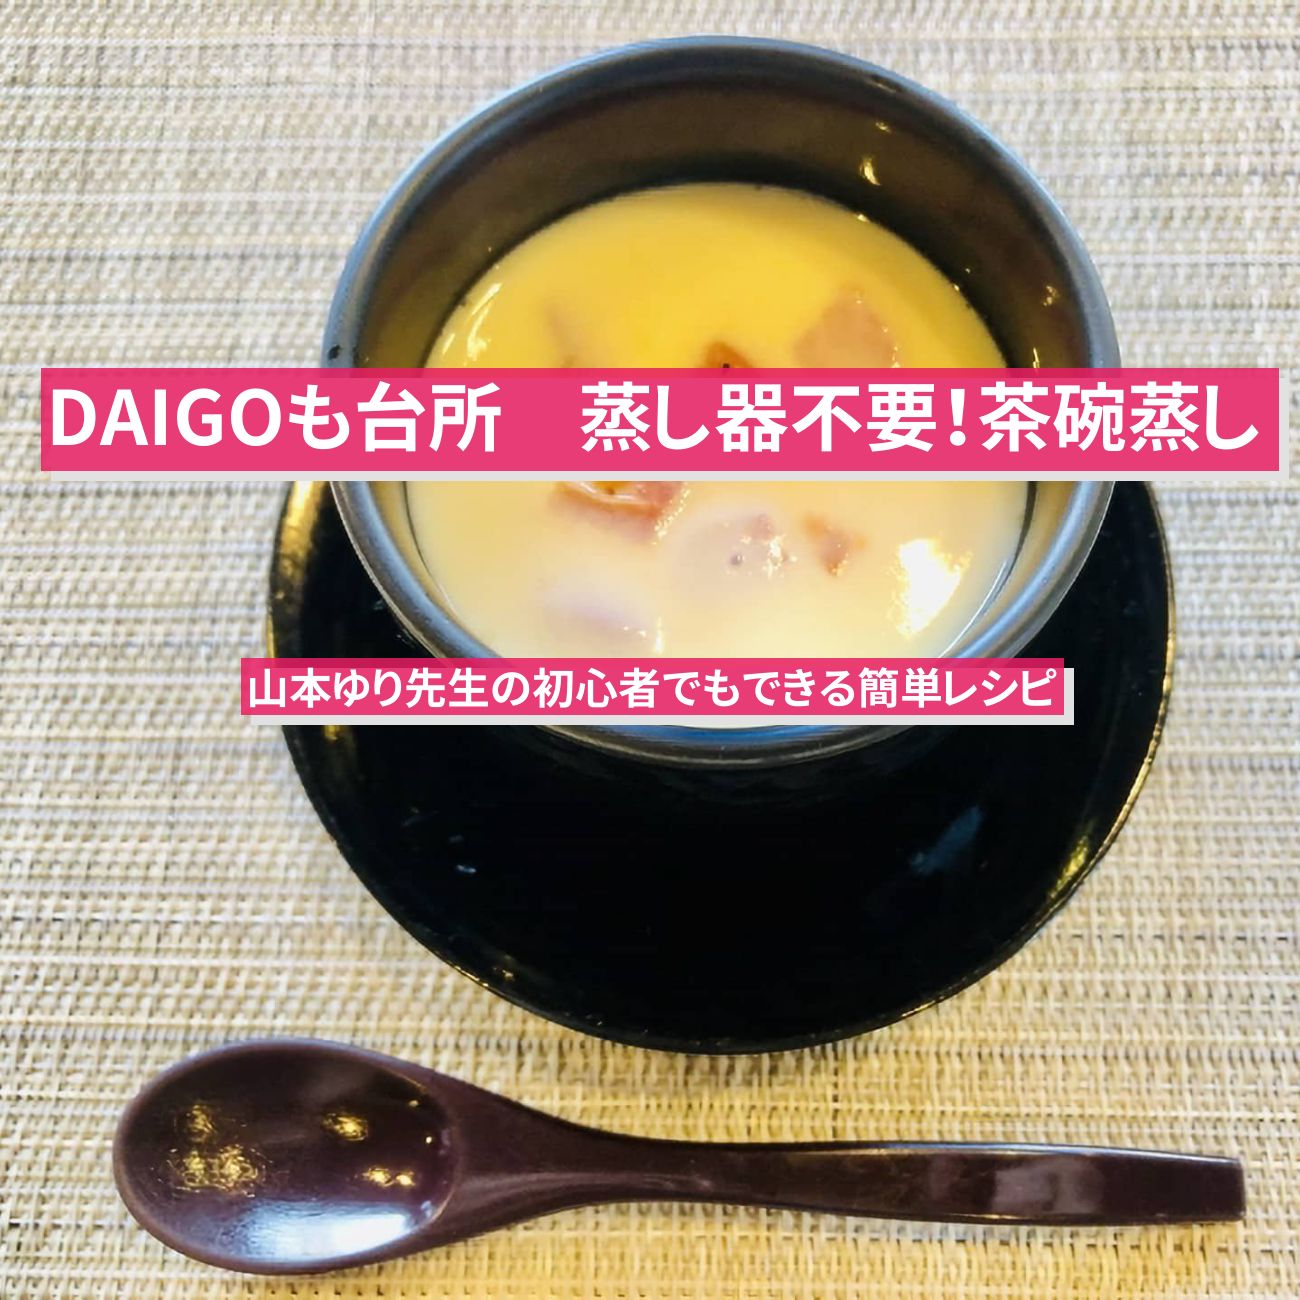 【DAIGOも台所】蒸し器不要『茶碗蒸し』の鍋で作るレシピ・作り方を紹介